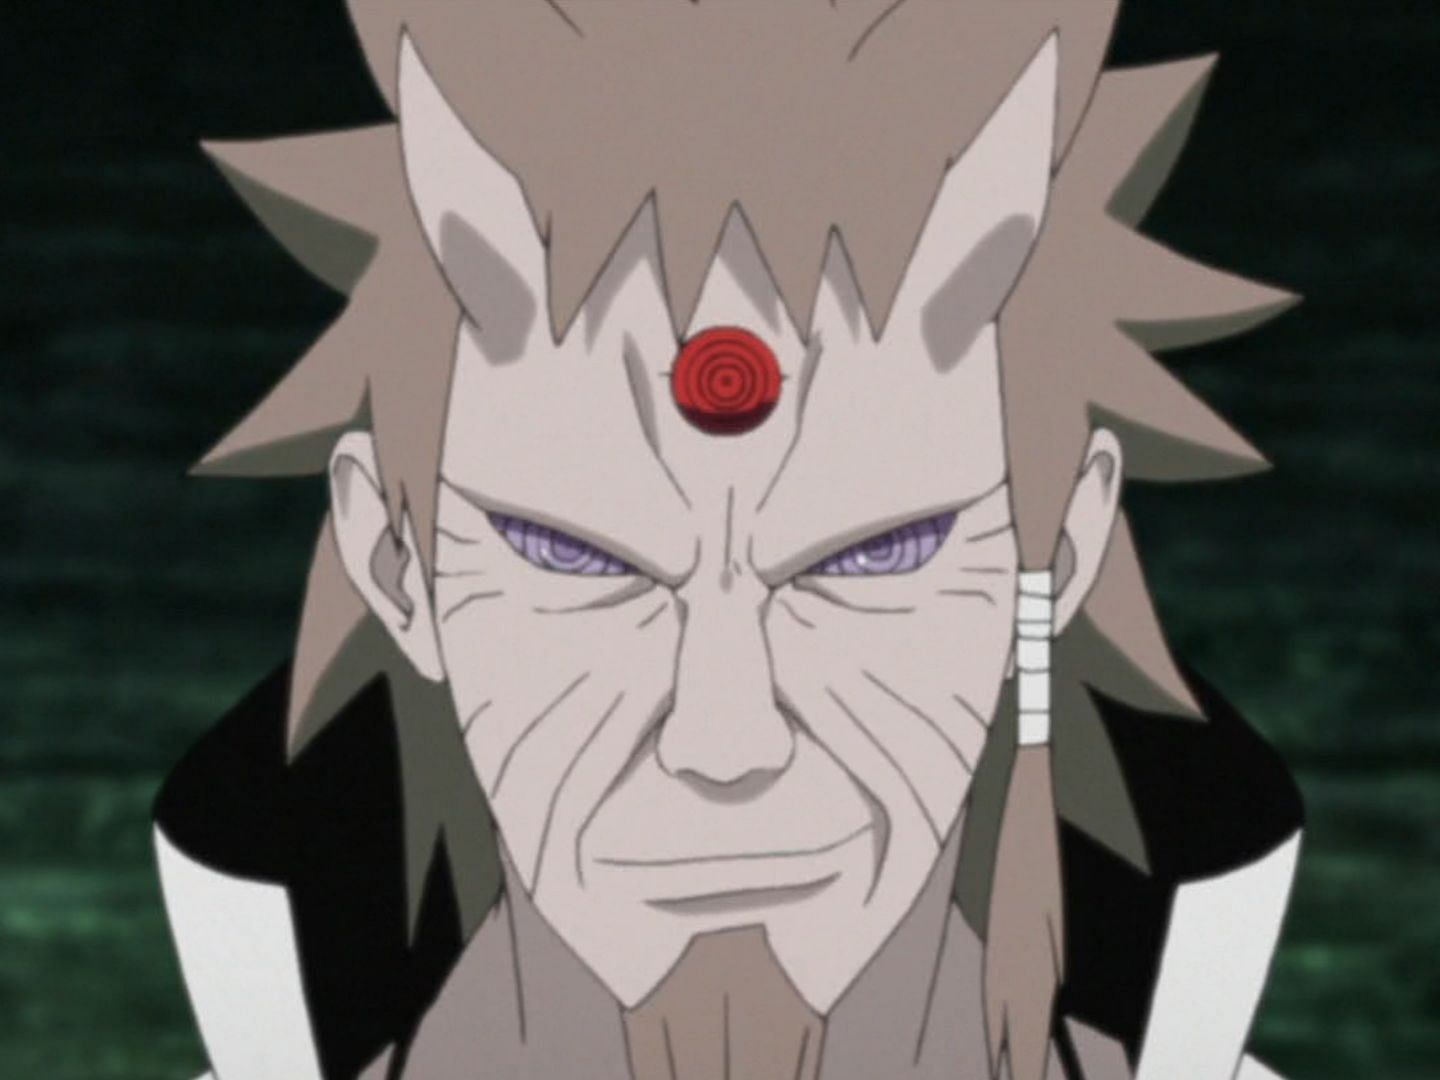 Hagoromo Otsutsuki from the Naruto series (image via Pierrot)